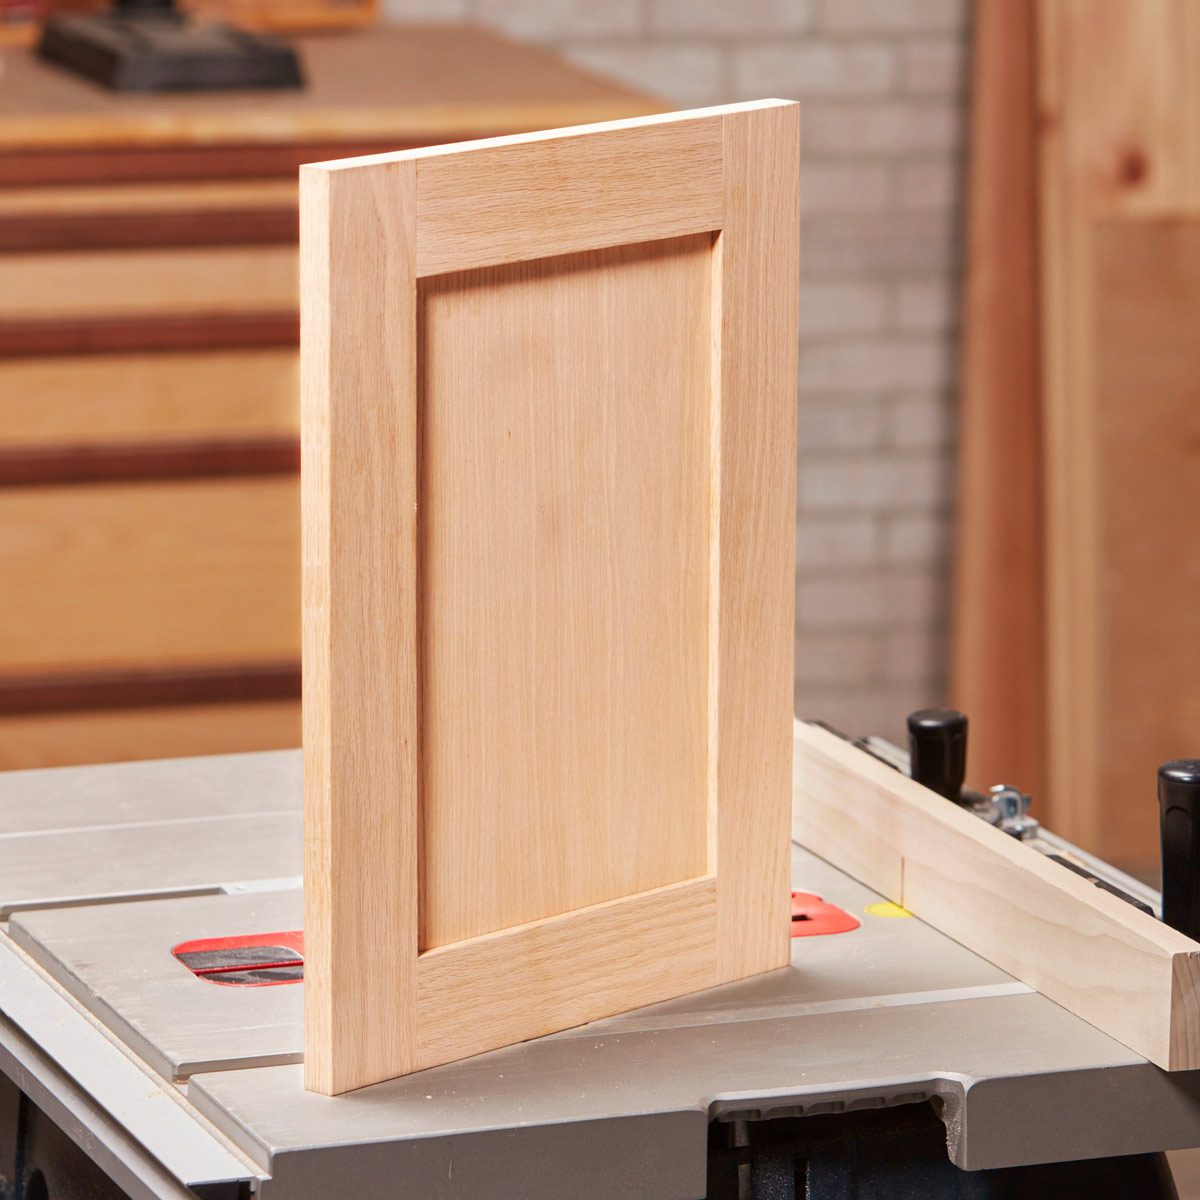 DIY Cabinet Doors: How to Build and Install Cabinet Doors